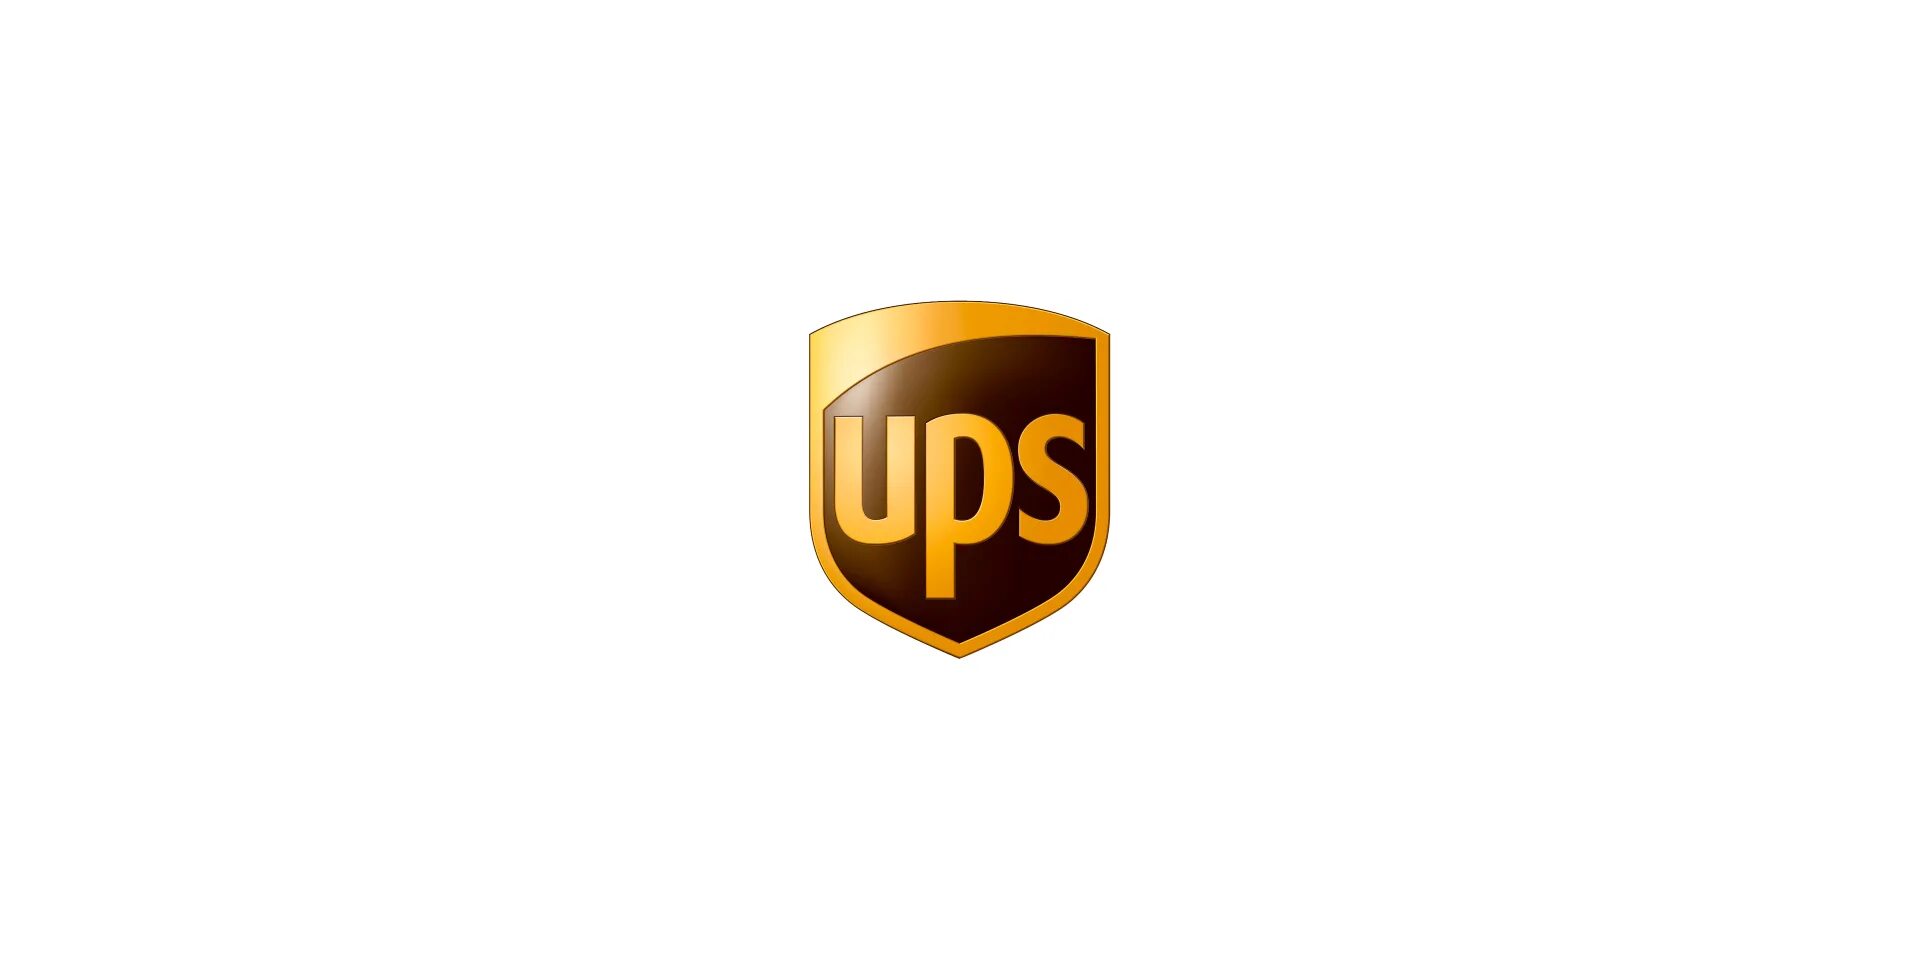 T me bank open ups. Ups logo. Ups logo PNG. Ups фирменный знак. United parcel service логотип.